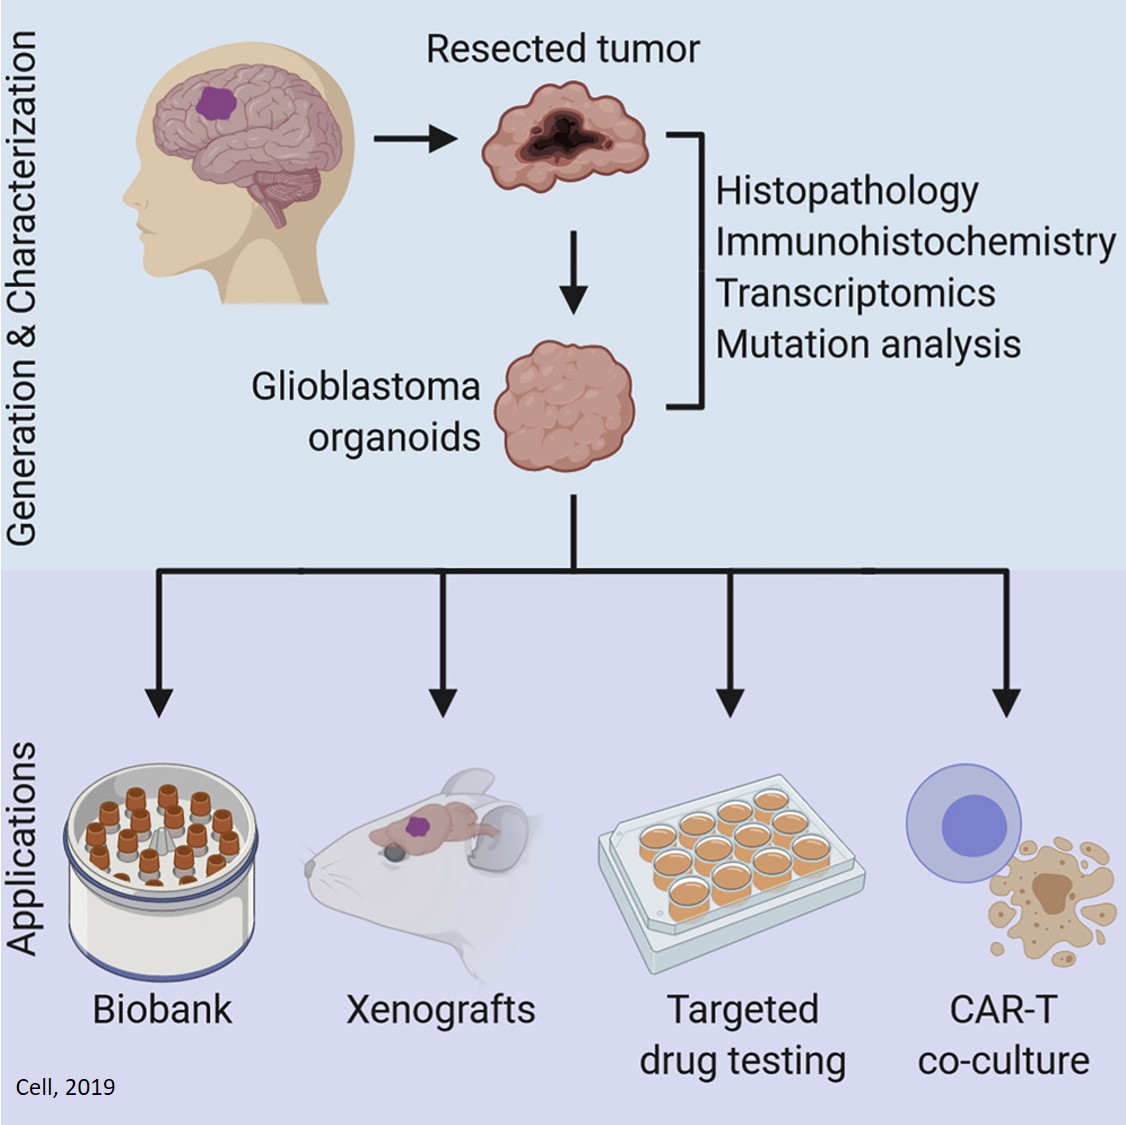 Brain tumor organoids may be key to time-sensitive treatments for glioblastomas